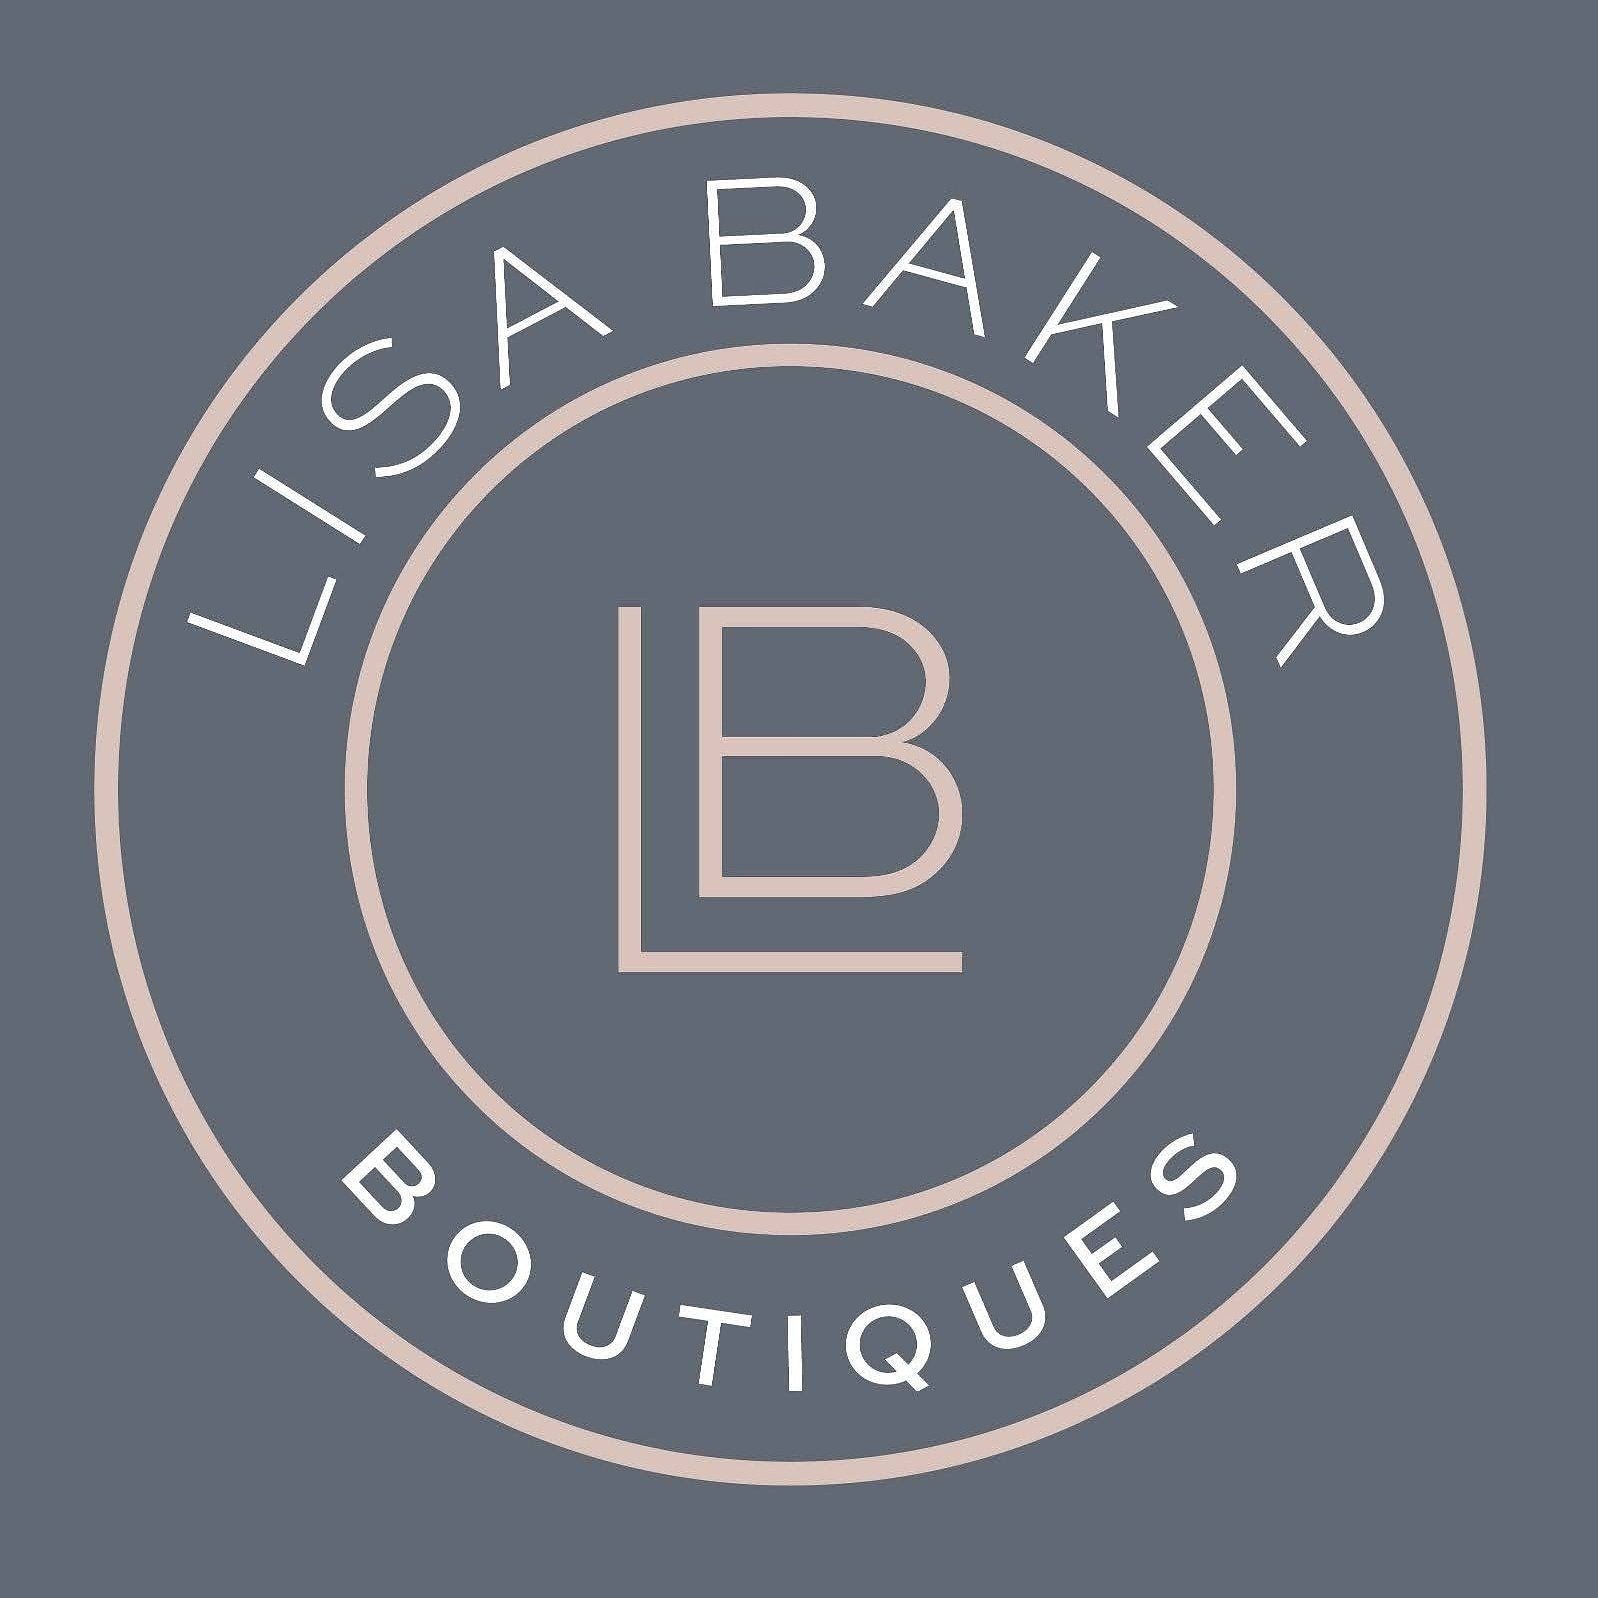 Lisa Baker Boutiques